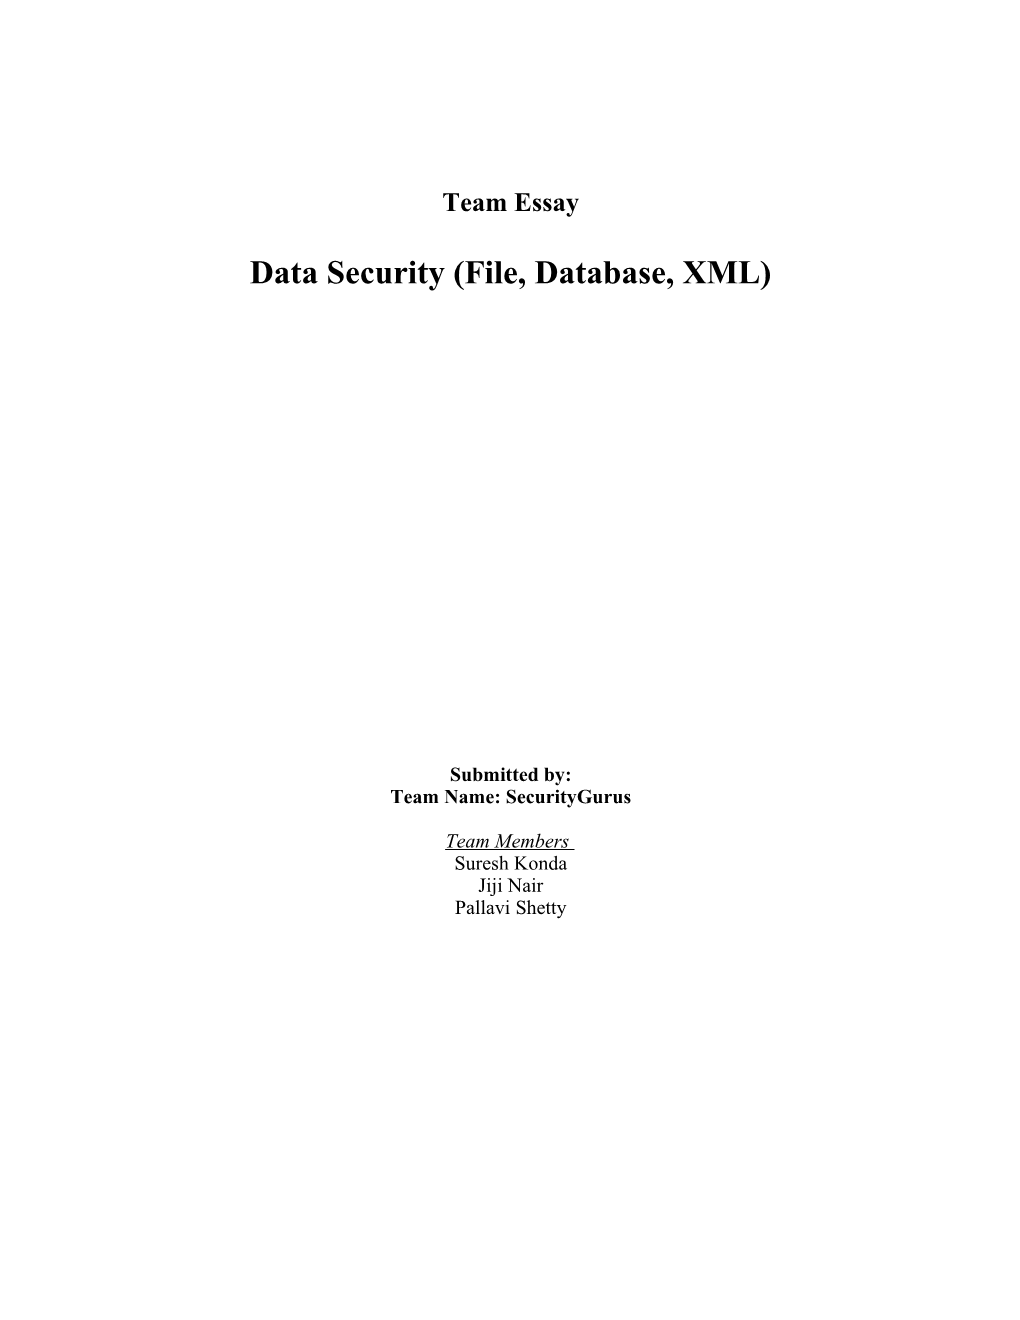 Data Security (File, Database, XML)